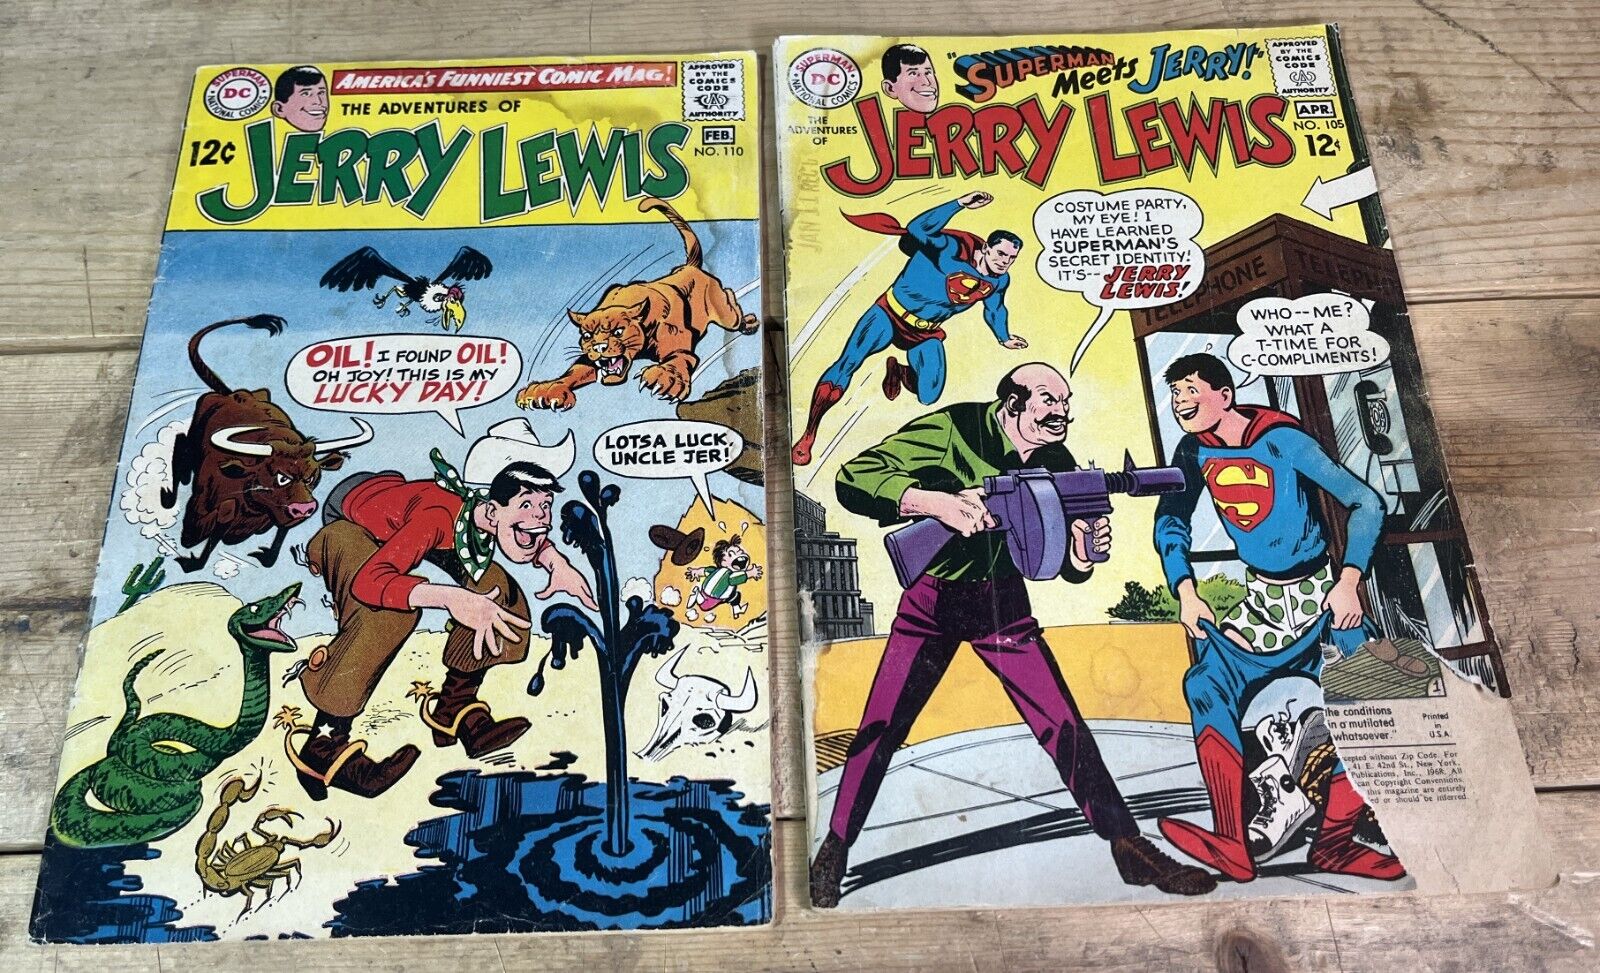 Superman Meets Jerry Lewis # 105 - Adventures Of Jerry Lewis #110 - Comics Lot